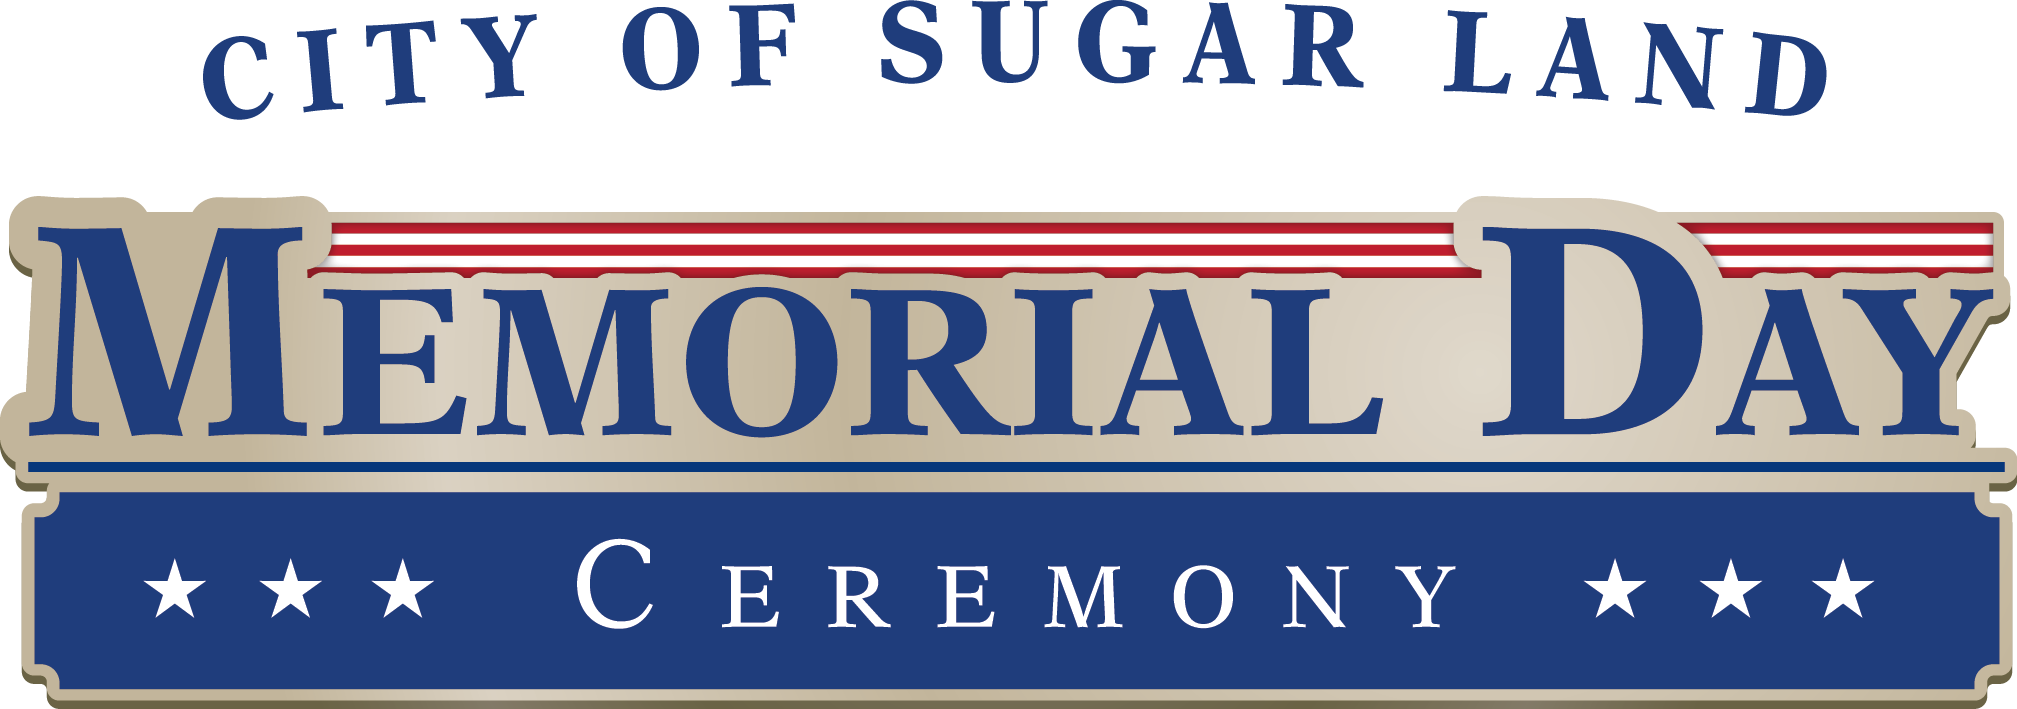 Sugar Land Memorial Day Ceremony Banner